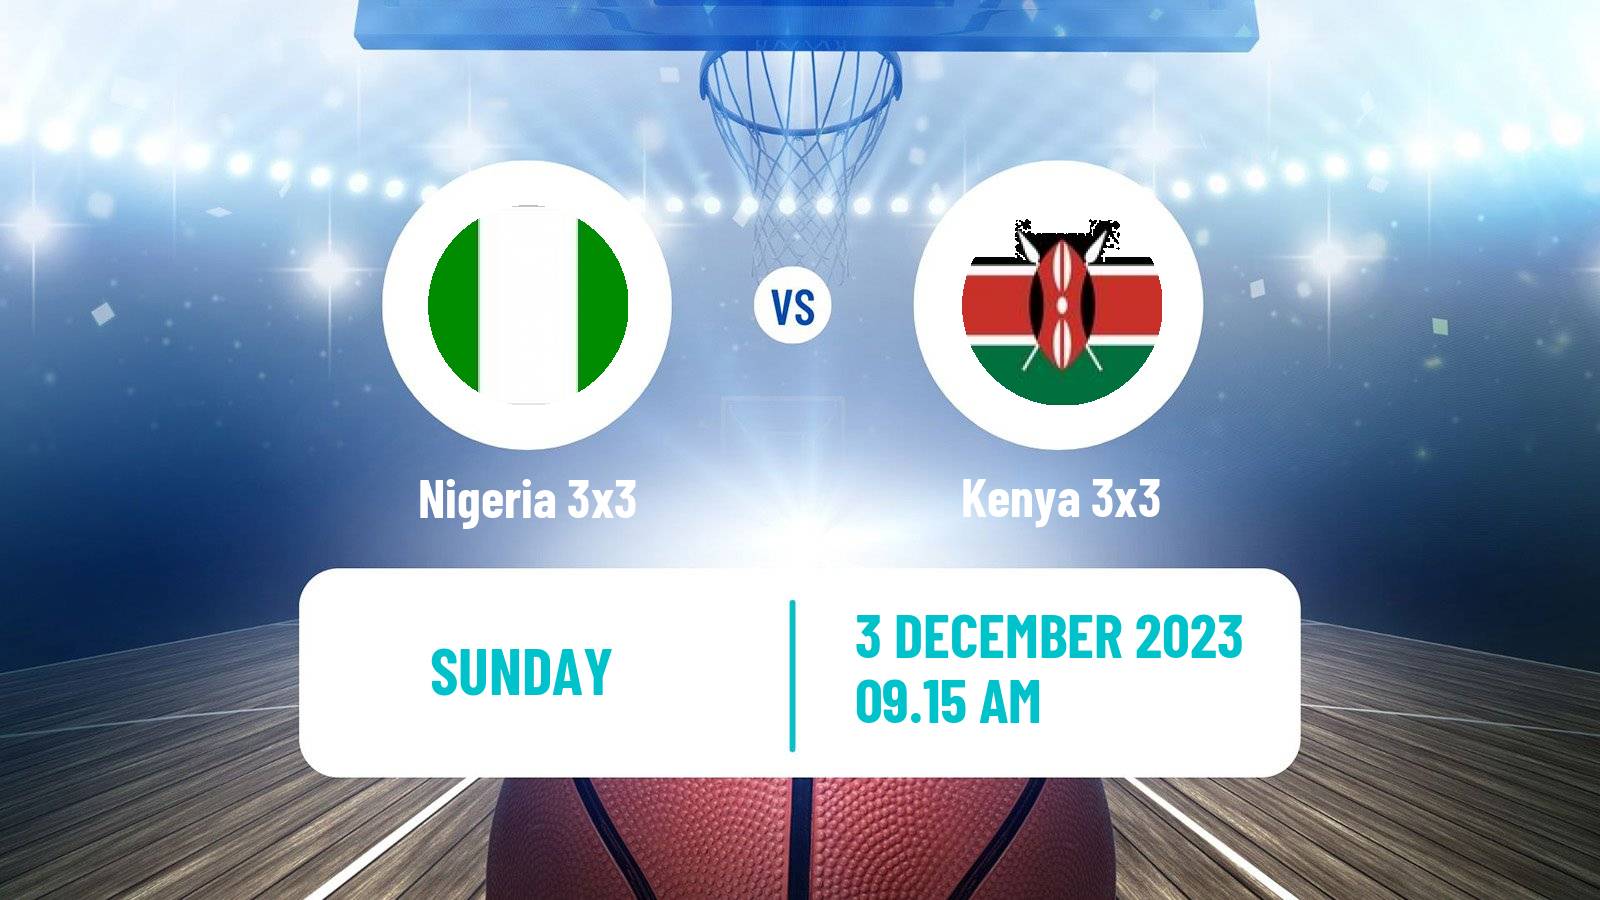 Basketball Africa Cup 3x3 Nigeria 3x3 - Kenya 3x3